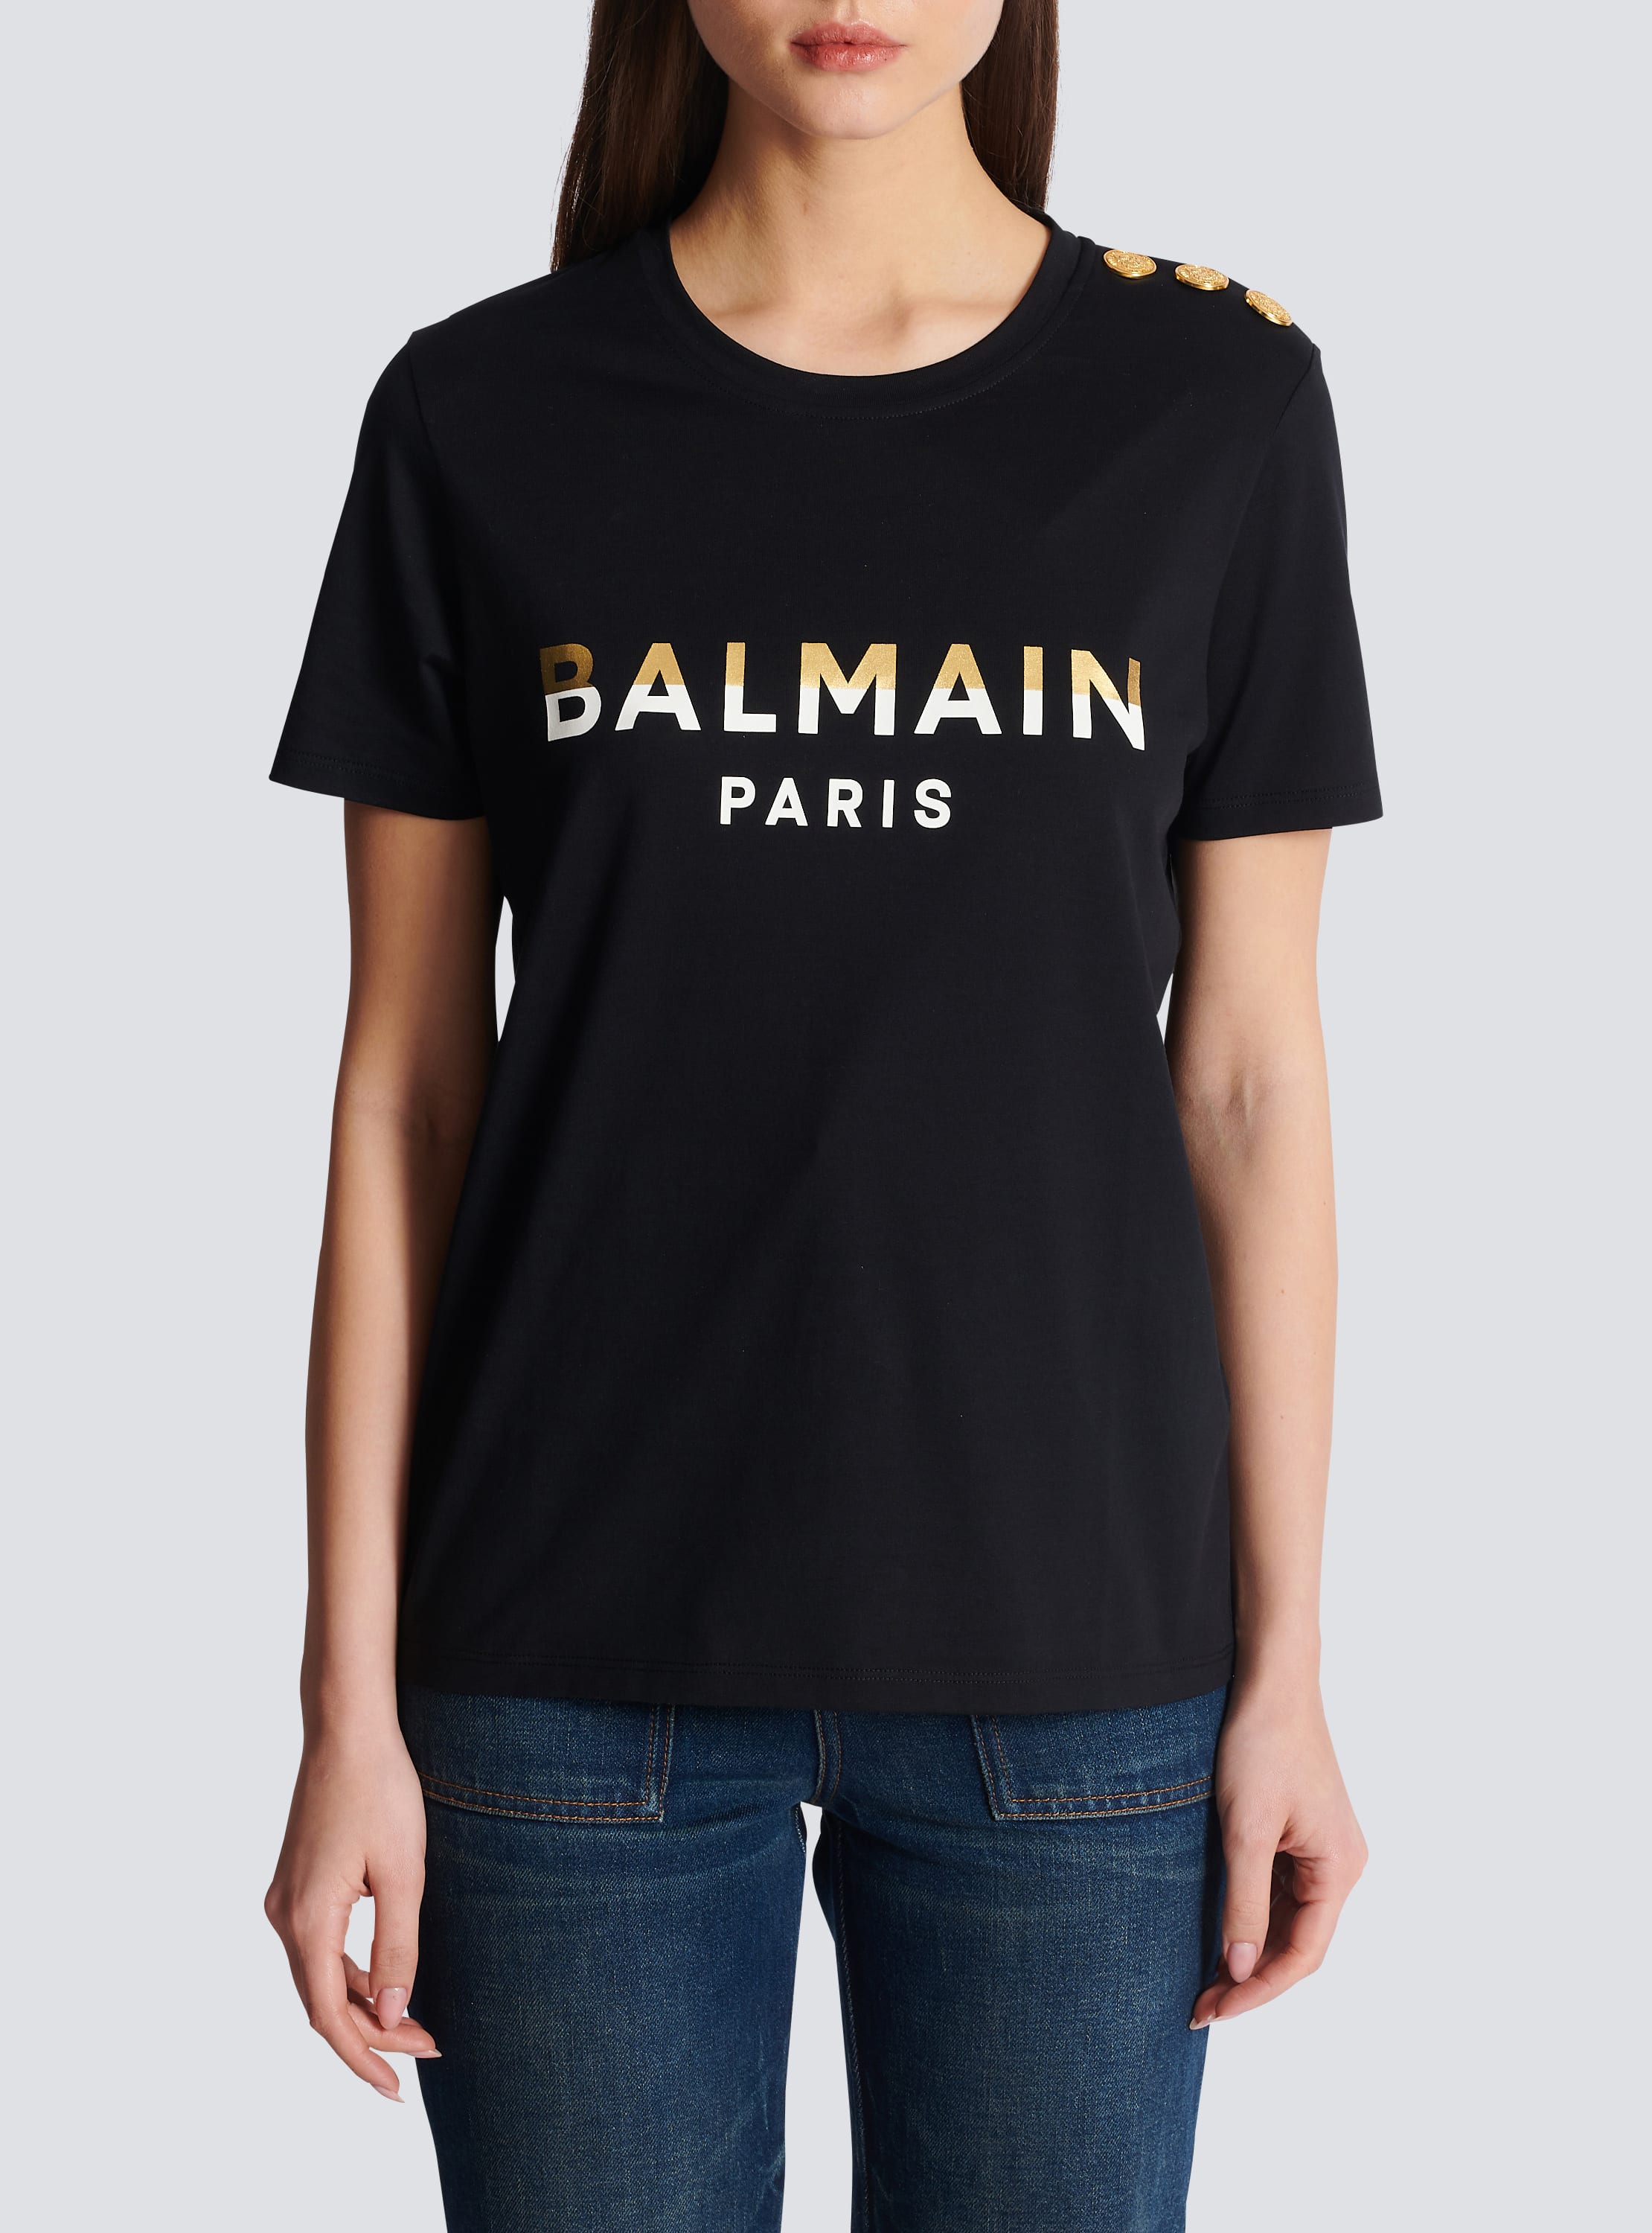 Balmain Paris ボタン付き Tシャツ